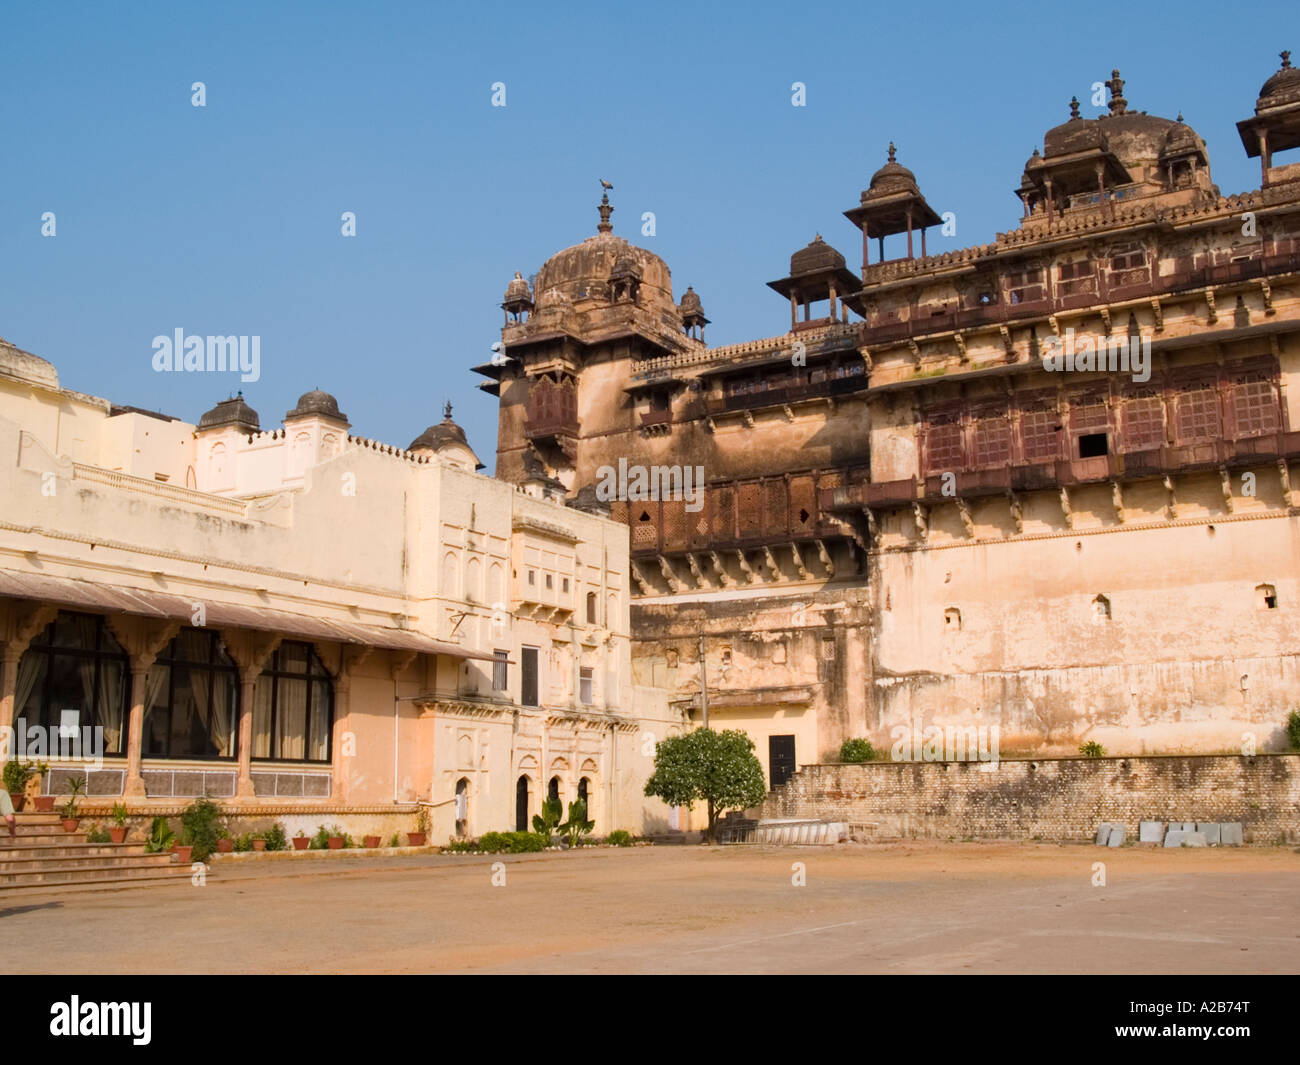 17th century Jahangir Mahal Palace Tiered palace crowned by chhatris domed pavilions Orchha Madhya Pradesh India Stock Photo